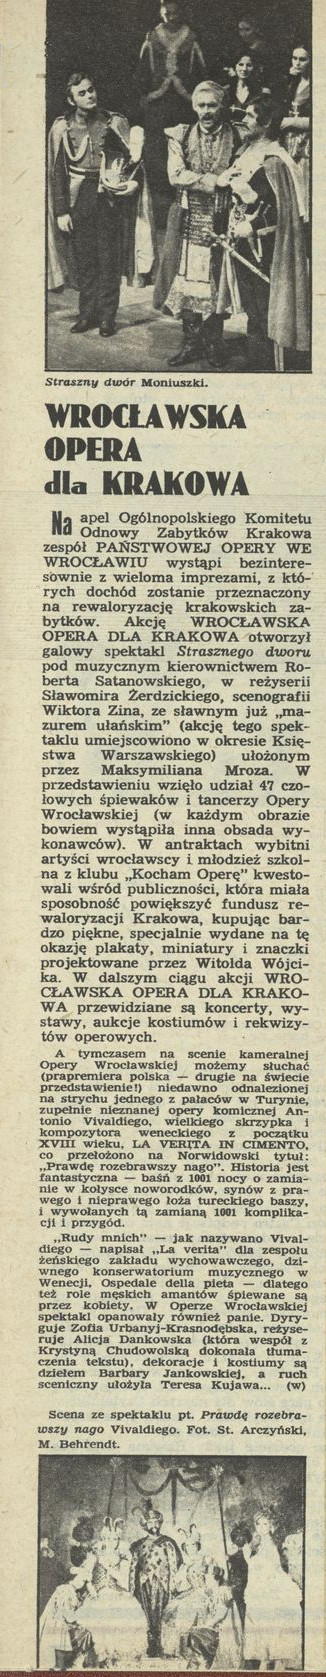 Wrocławska Opera dla Krakowa